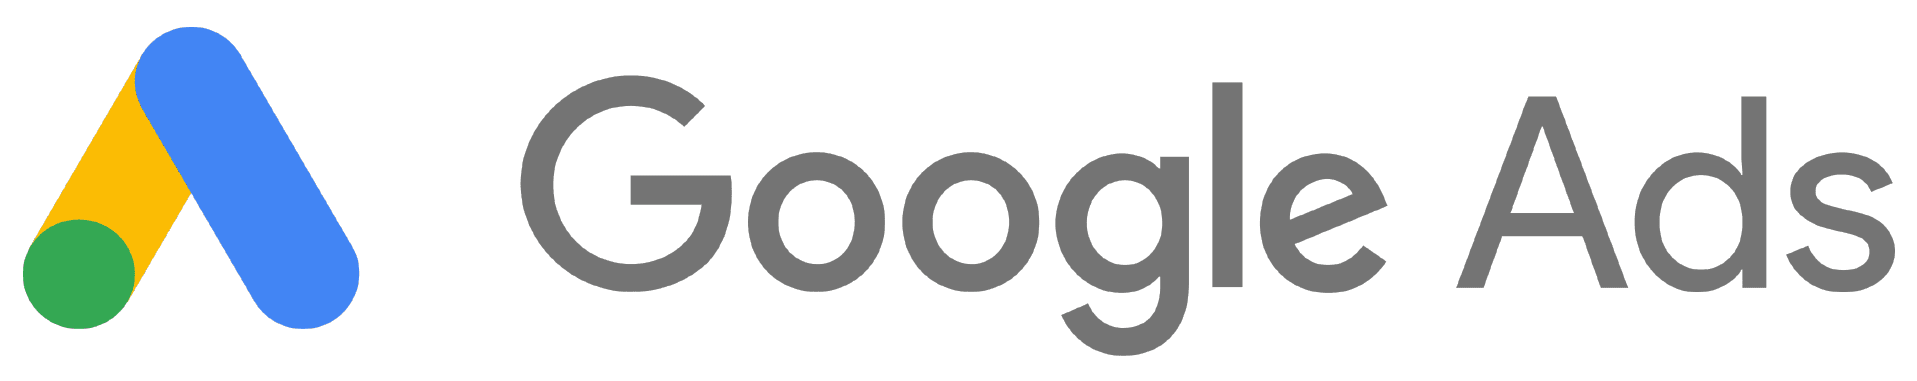 google-adwords-logo shrinked